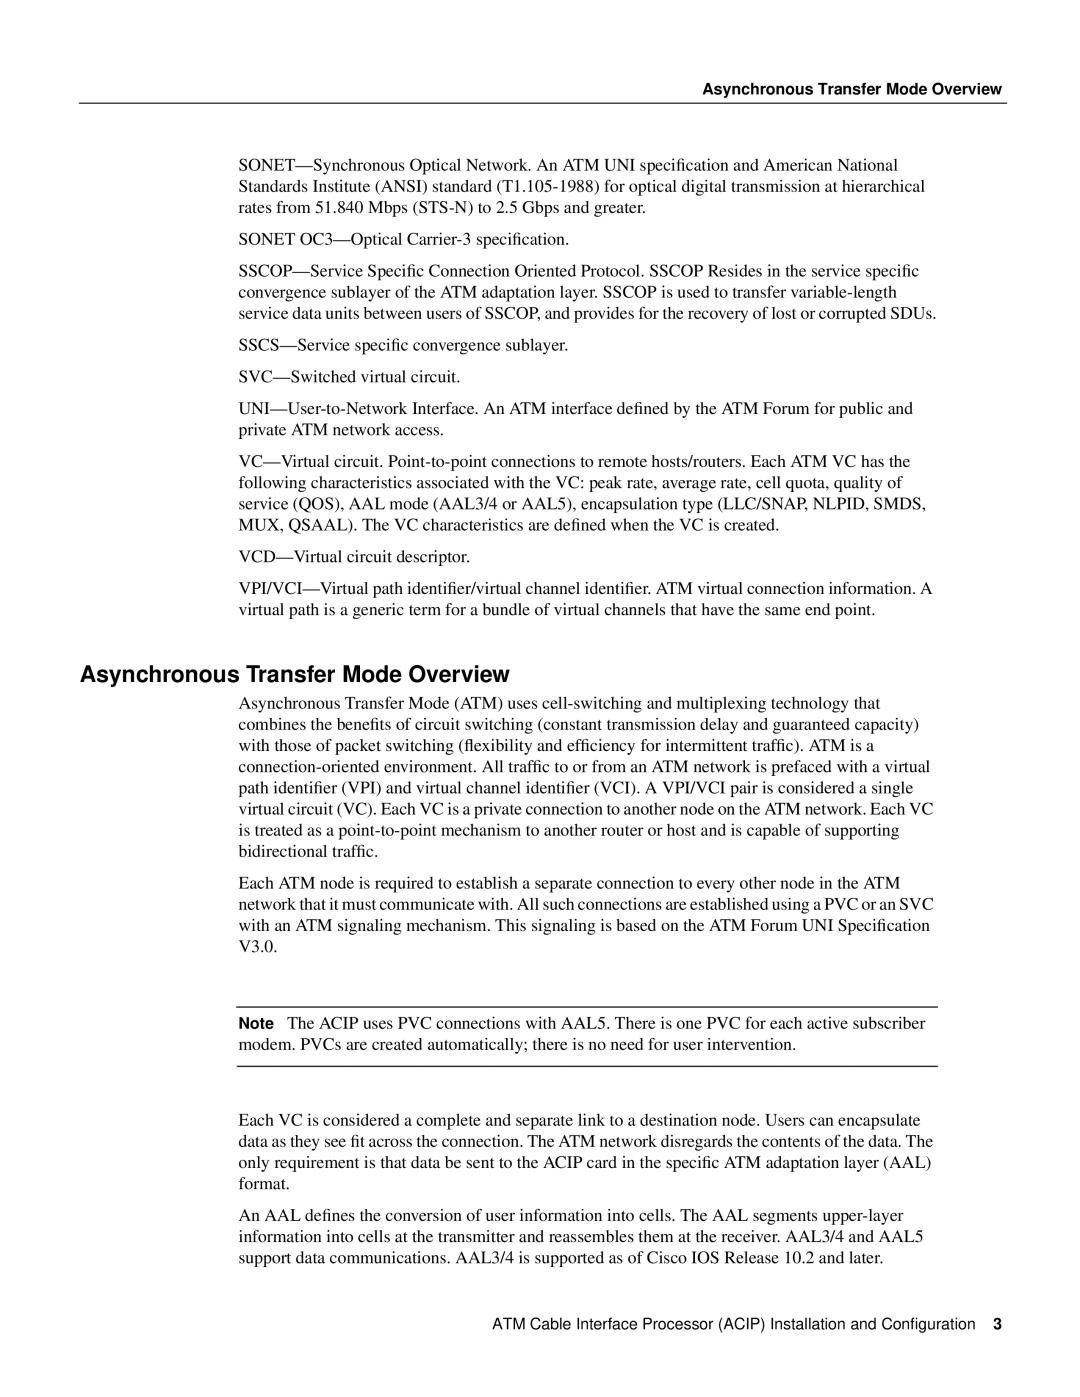 Cisco Systems ACIP-SM(=) manual Asynchronous Transfer Mode Overview 